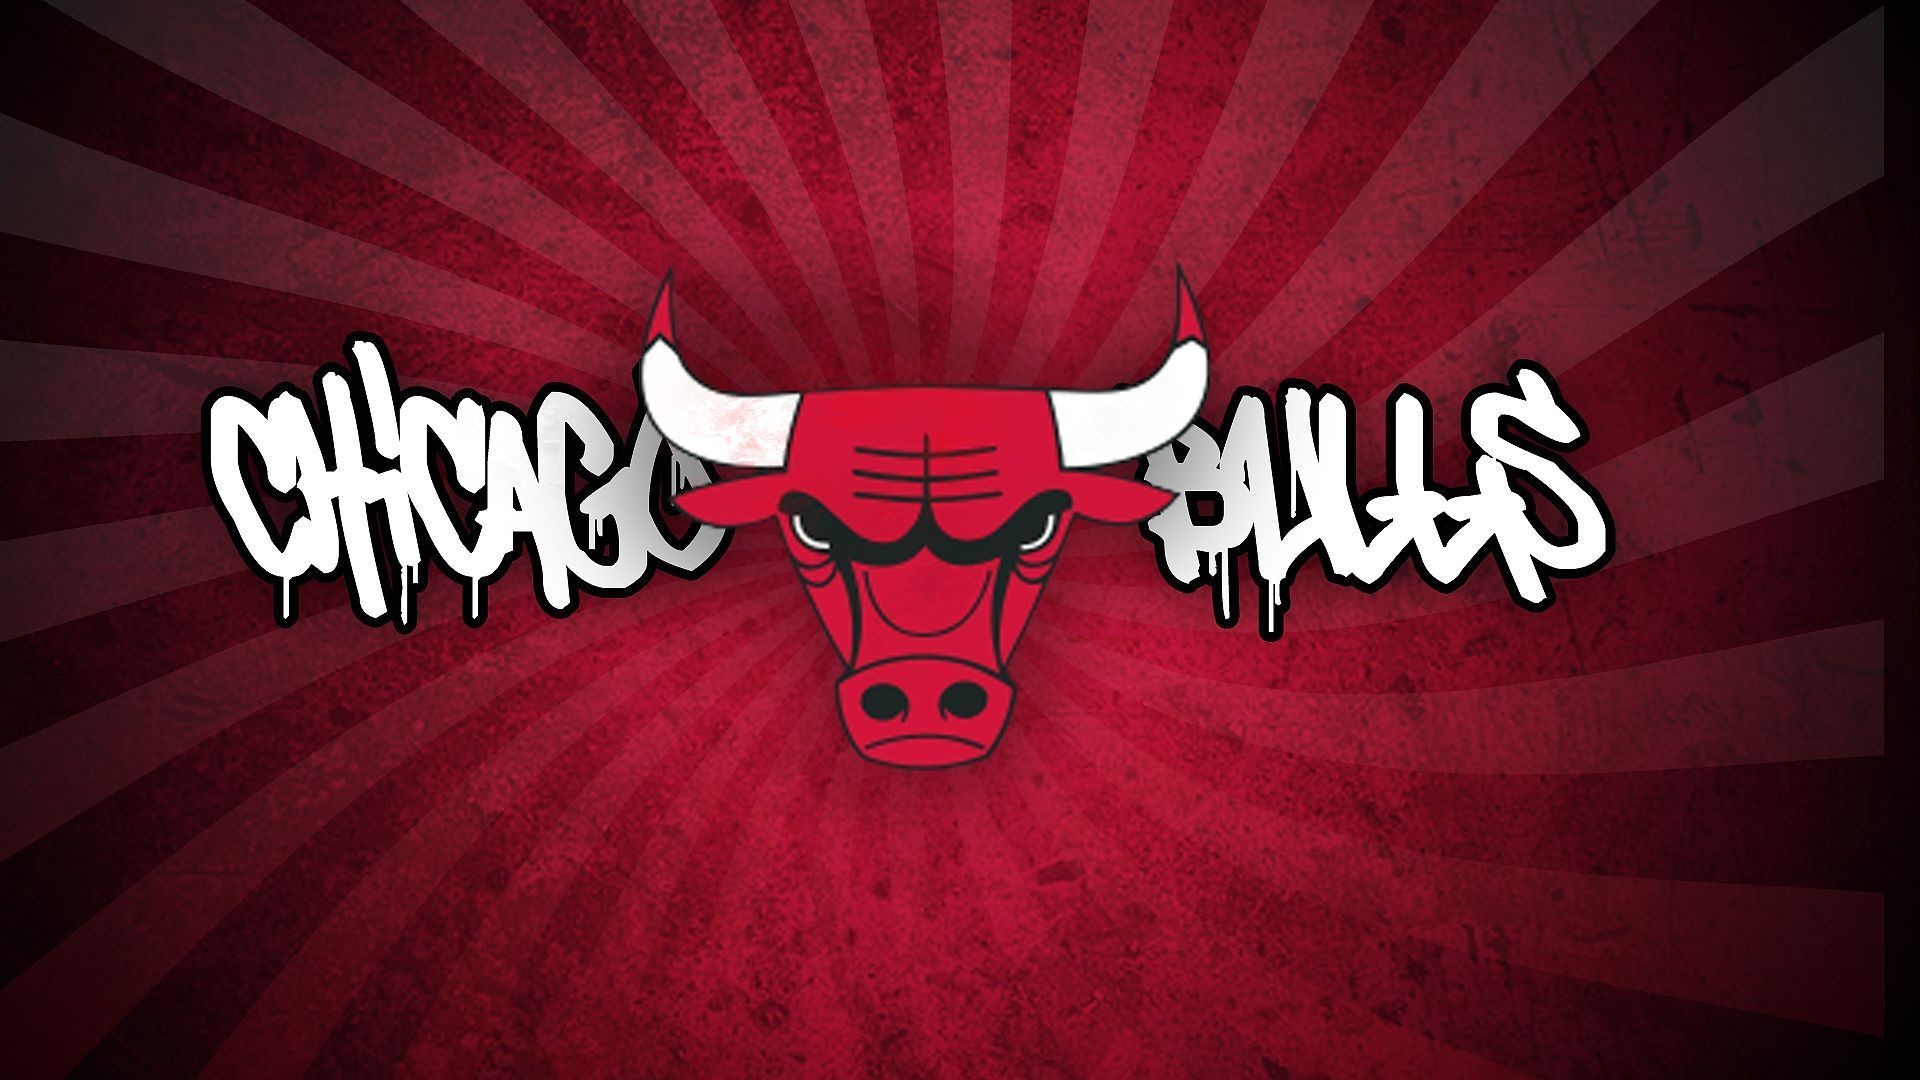 1920x1080 Fonds d?cran Chicago Bulls : tous les wallpapers Chicago Bulls